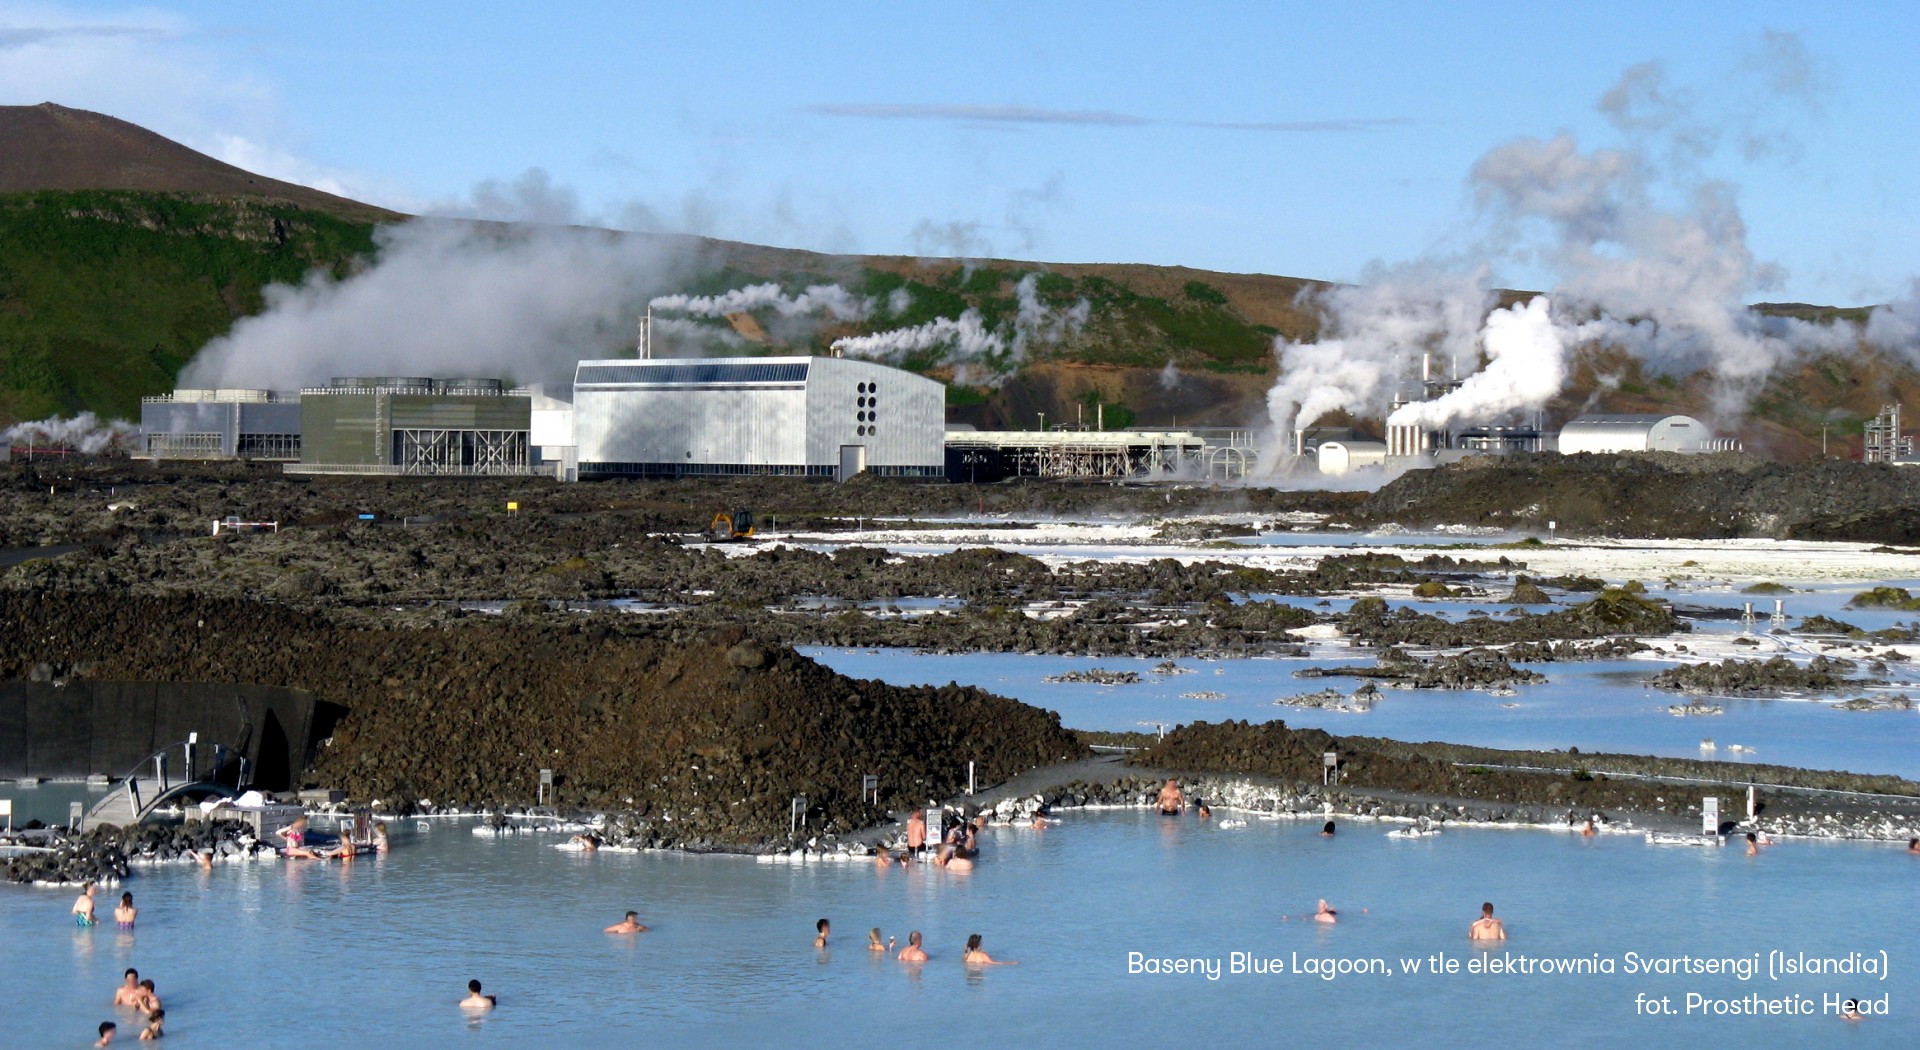 Baseny Blue Lagoon, w tle islandzka elektrownia geotermalna Svartsengi